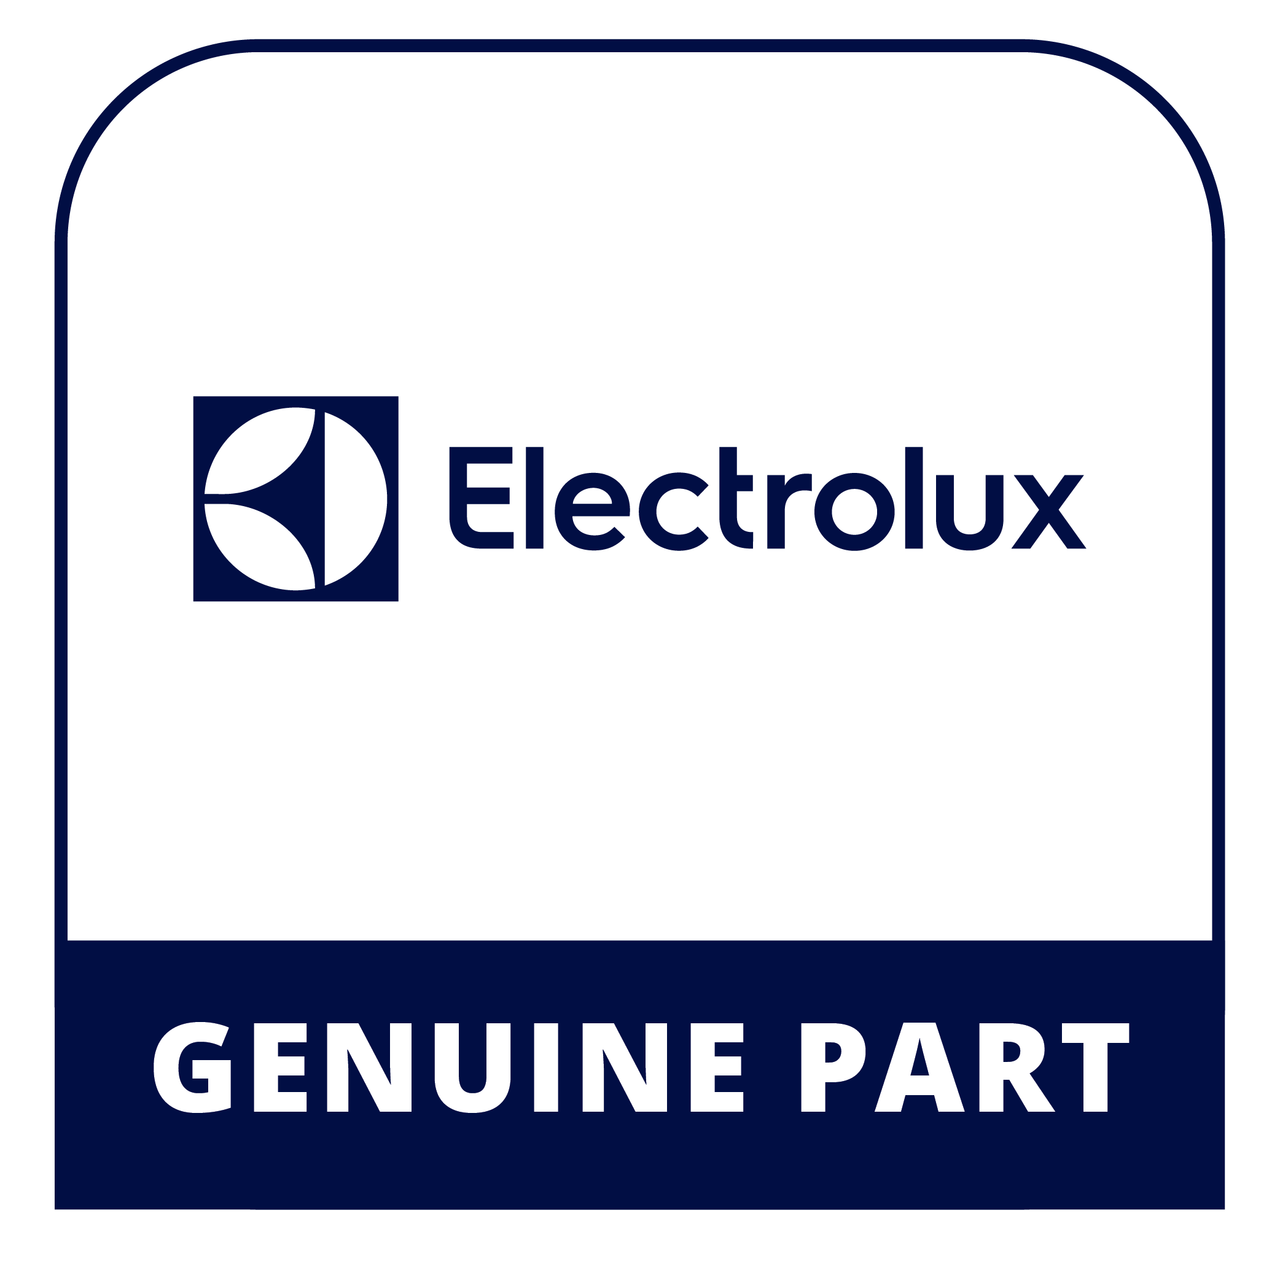 Frigidaire - Electrolux 318905812 Panel - Genuine Electrolux Part